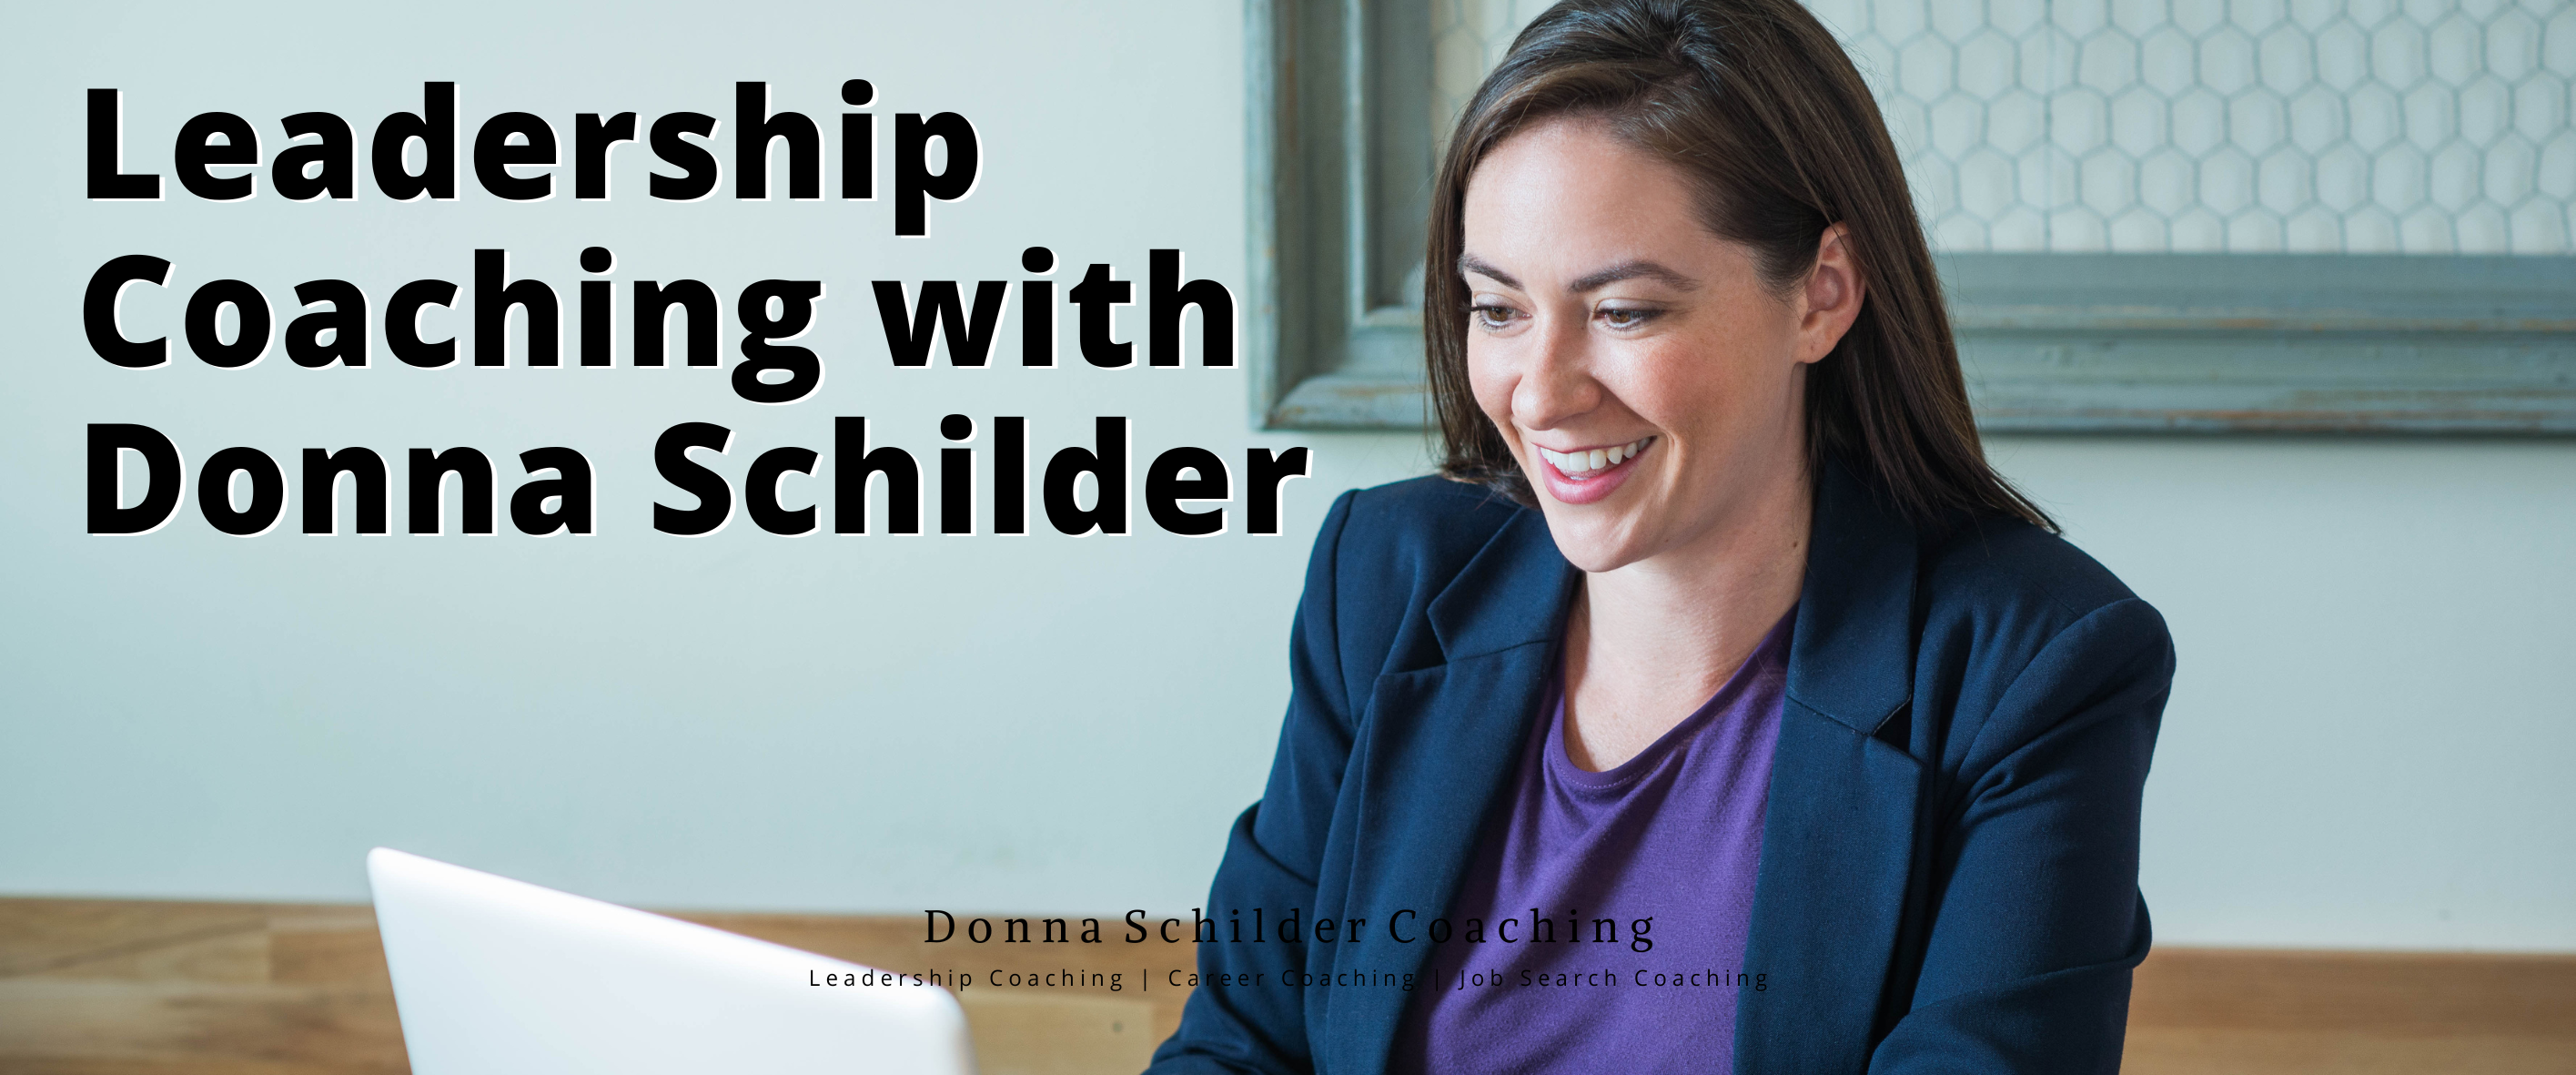 Leadership Coaching with Donna Schilder